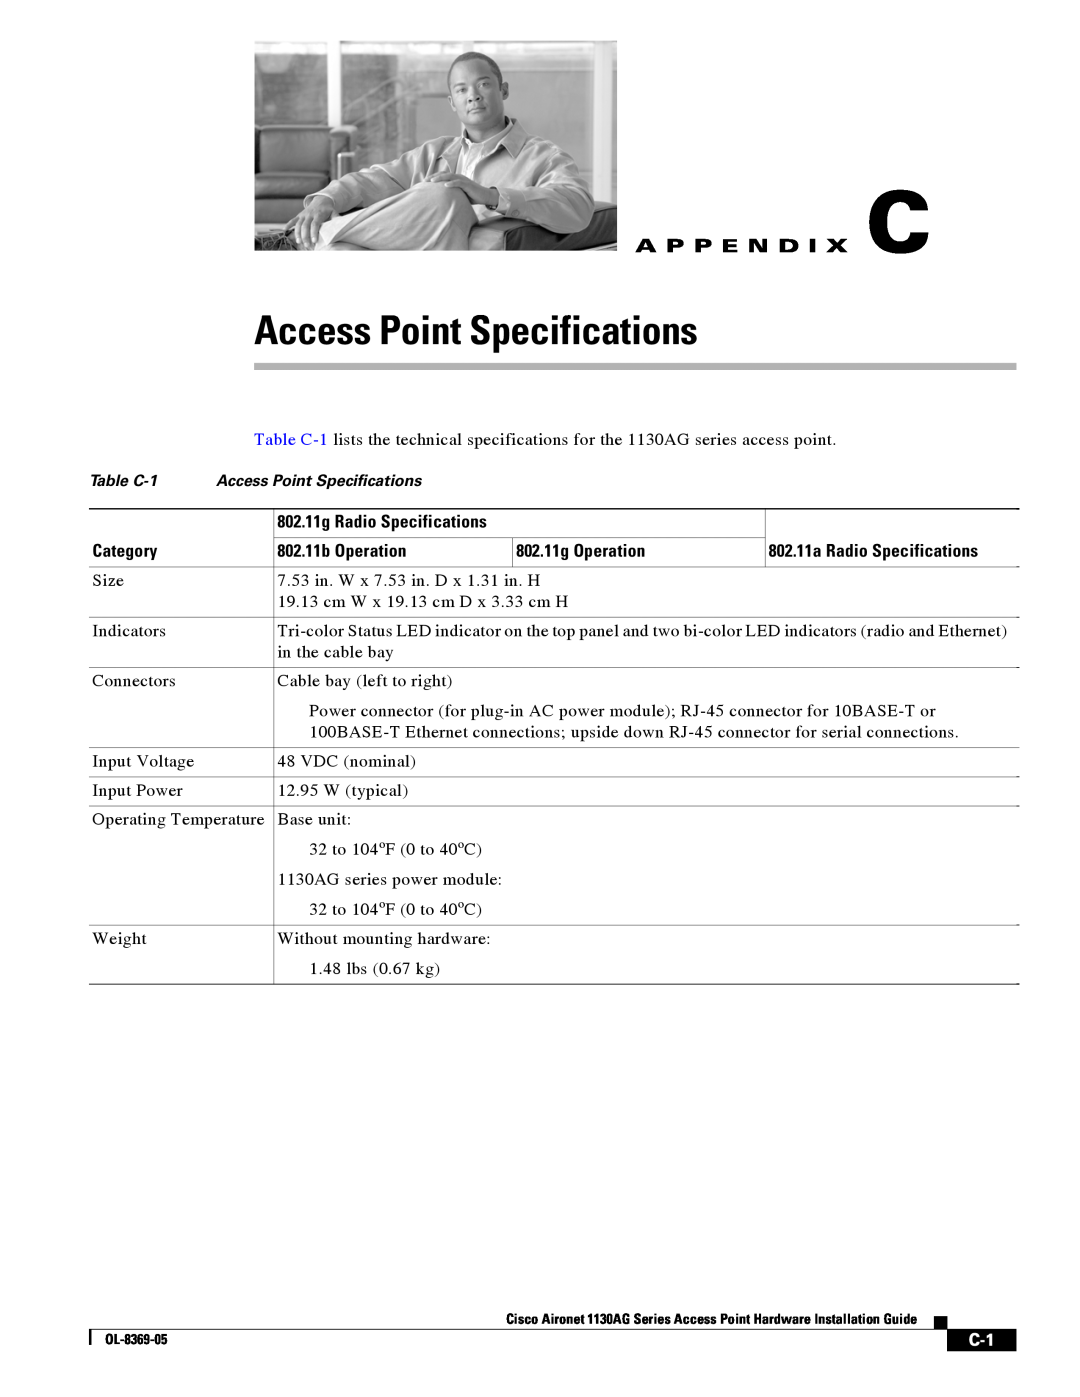 Cisco Systems 1130AG manual Access Point Specifications, A P P E N D I X C, Category, 802.11b Operation, 802.11g Operation 